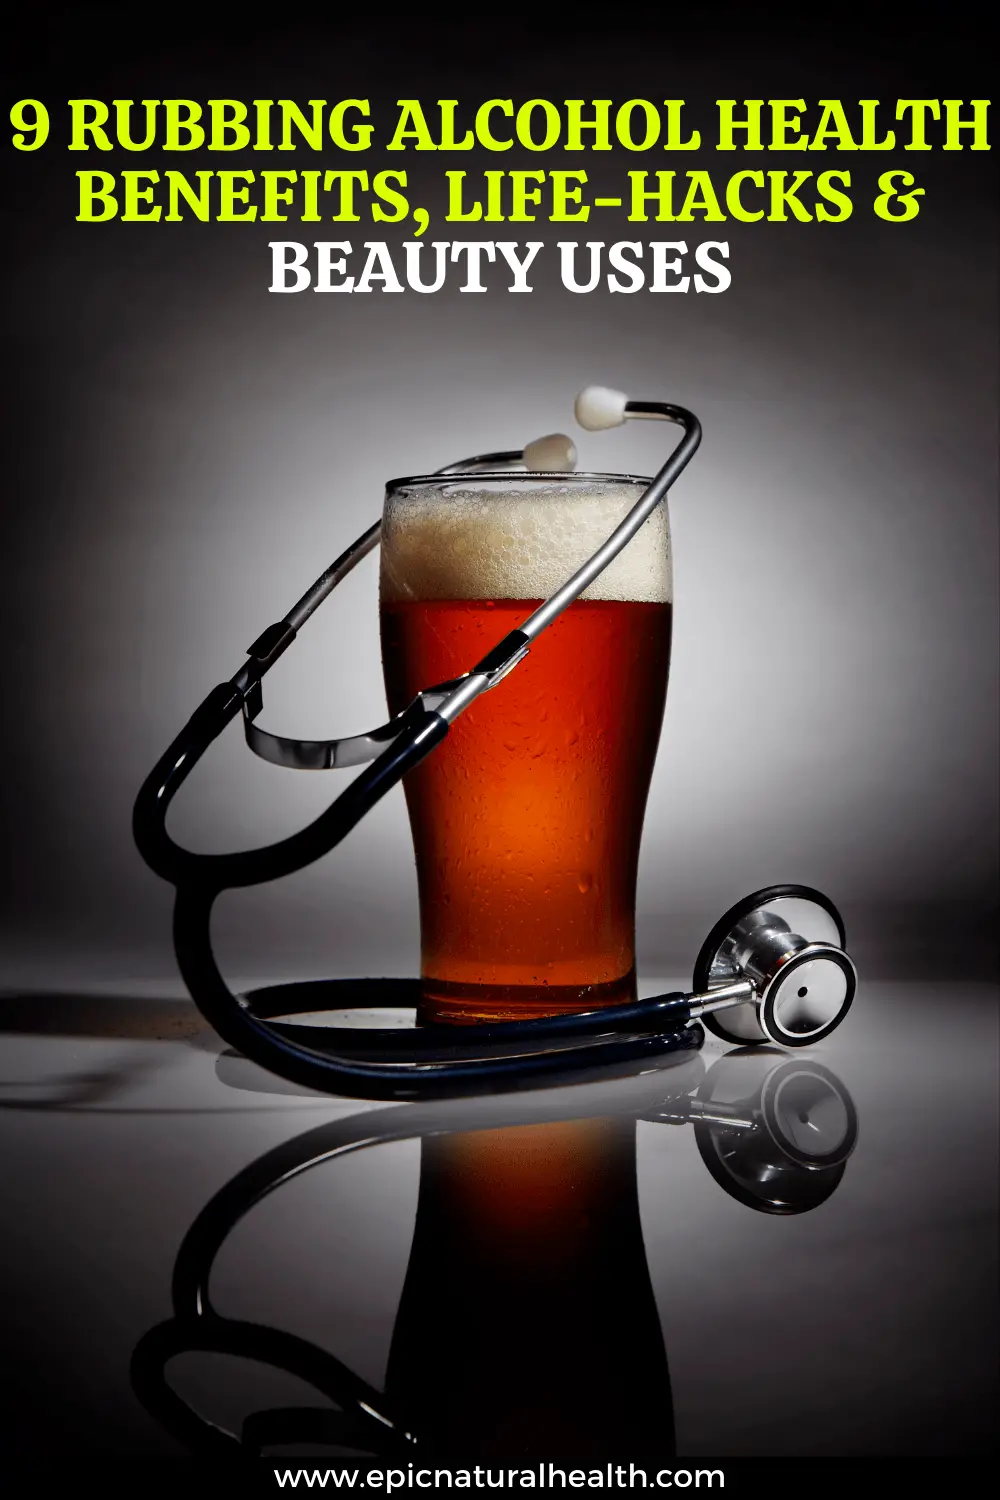 9 rubbing alcohol health benefits, life hacks and beauty uses